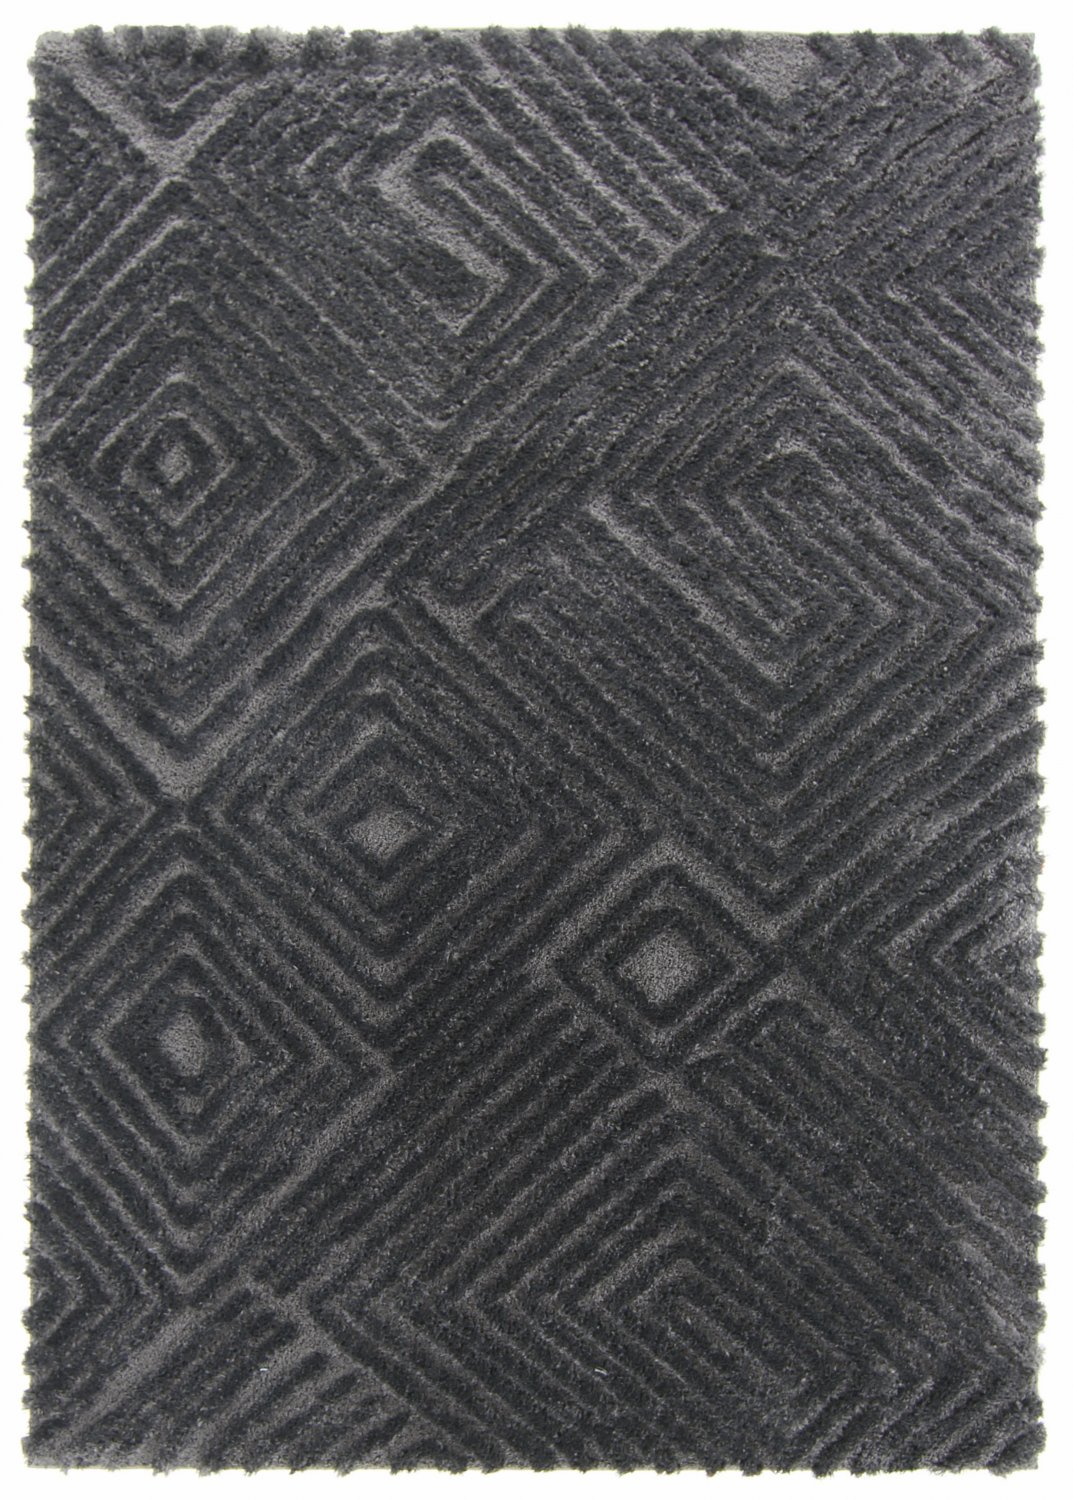 Shaggy rugs - Monti (black)